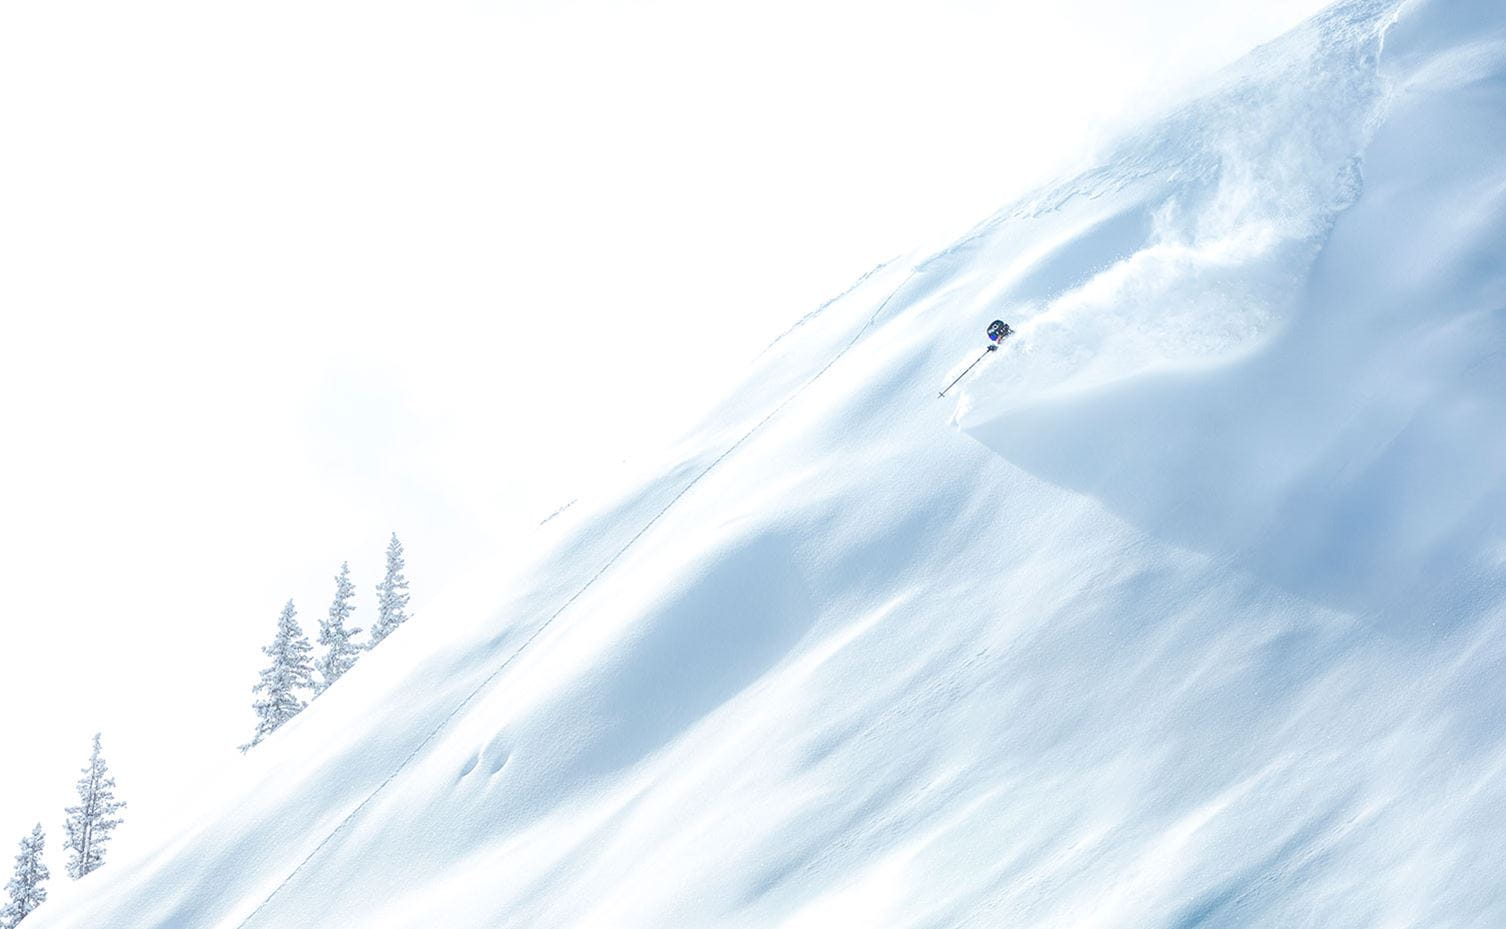 Sierra Schlag skiing through the powder